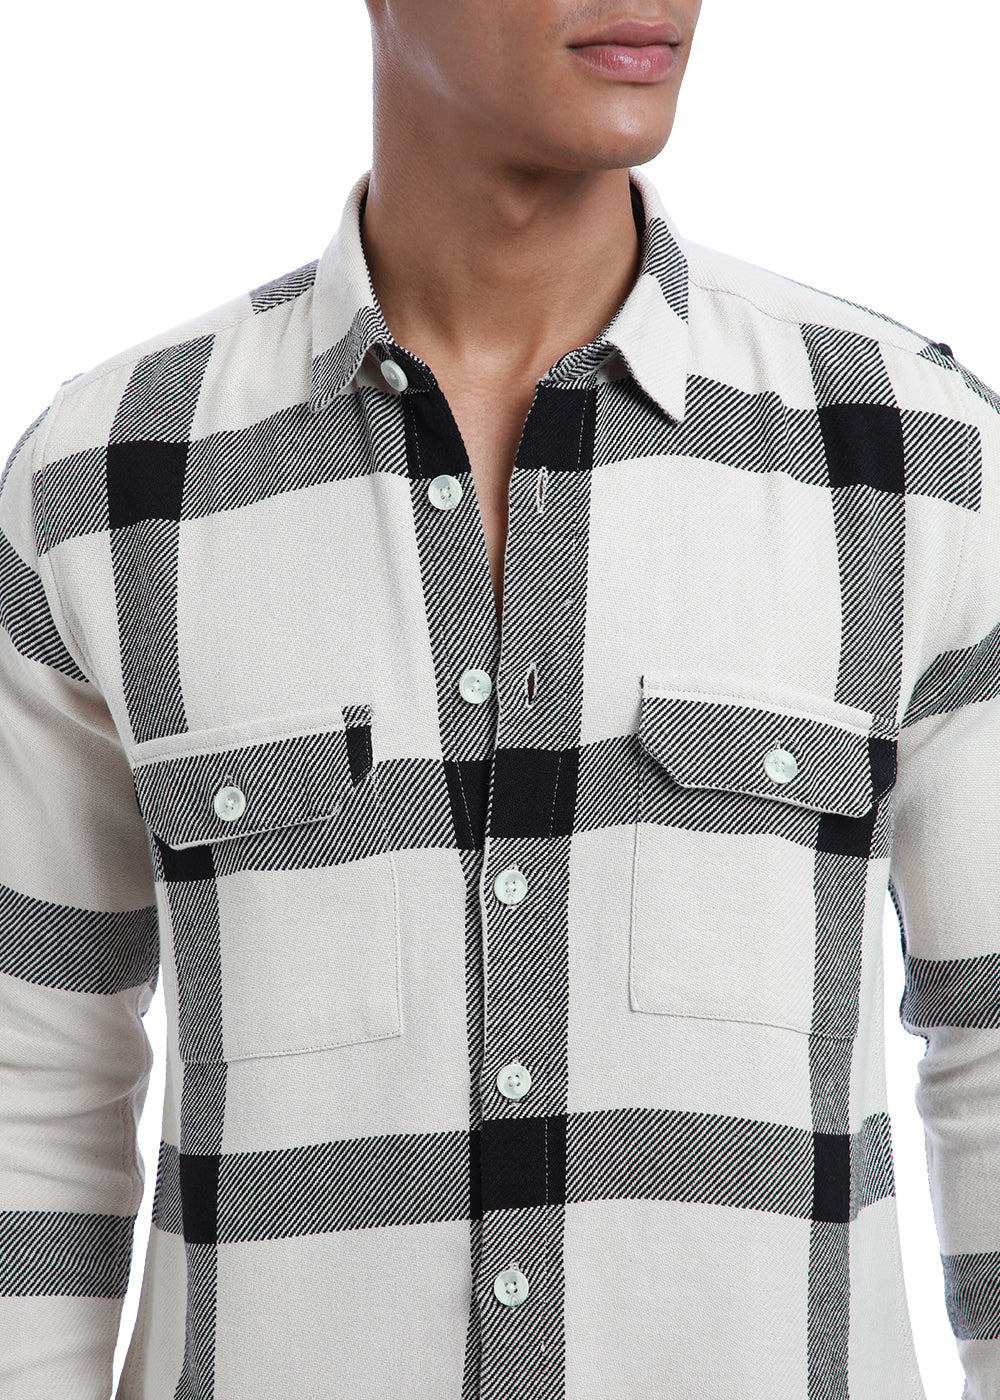 Black & White Brushed Cotton Check Shirt 4